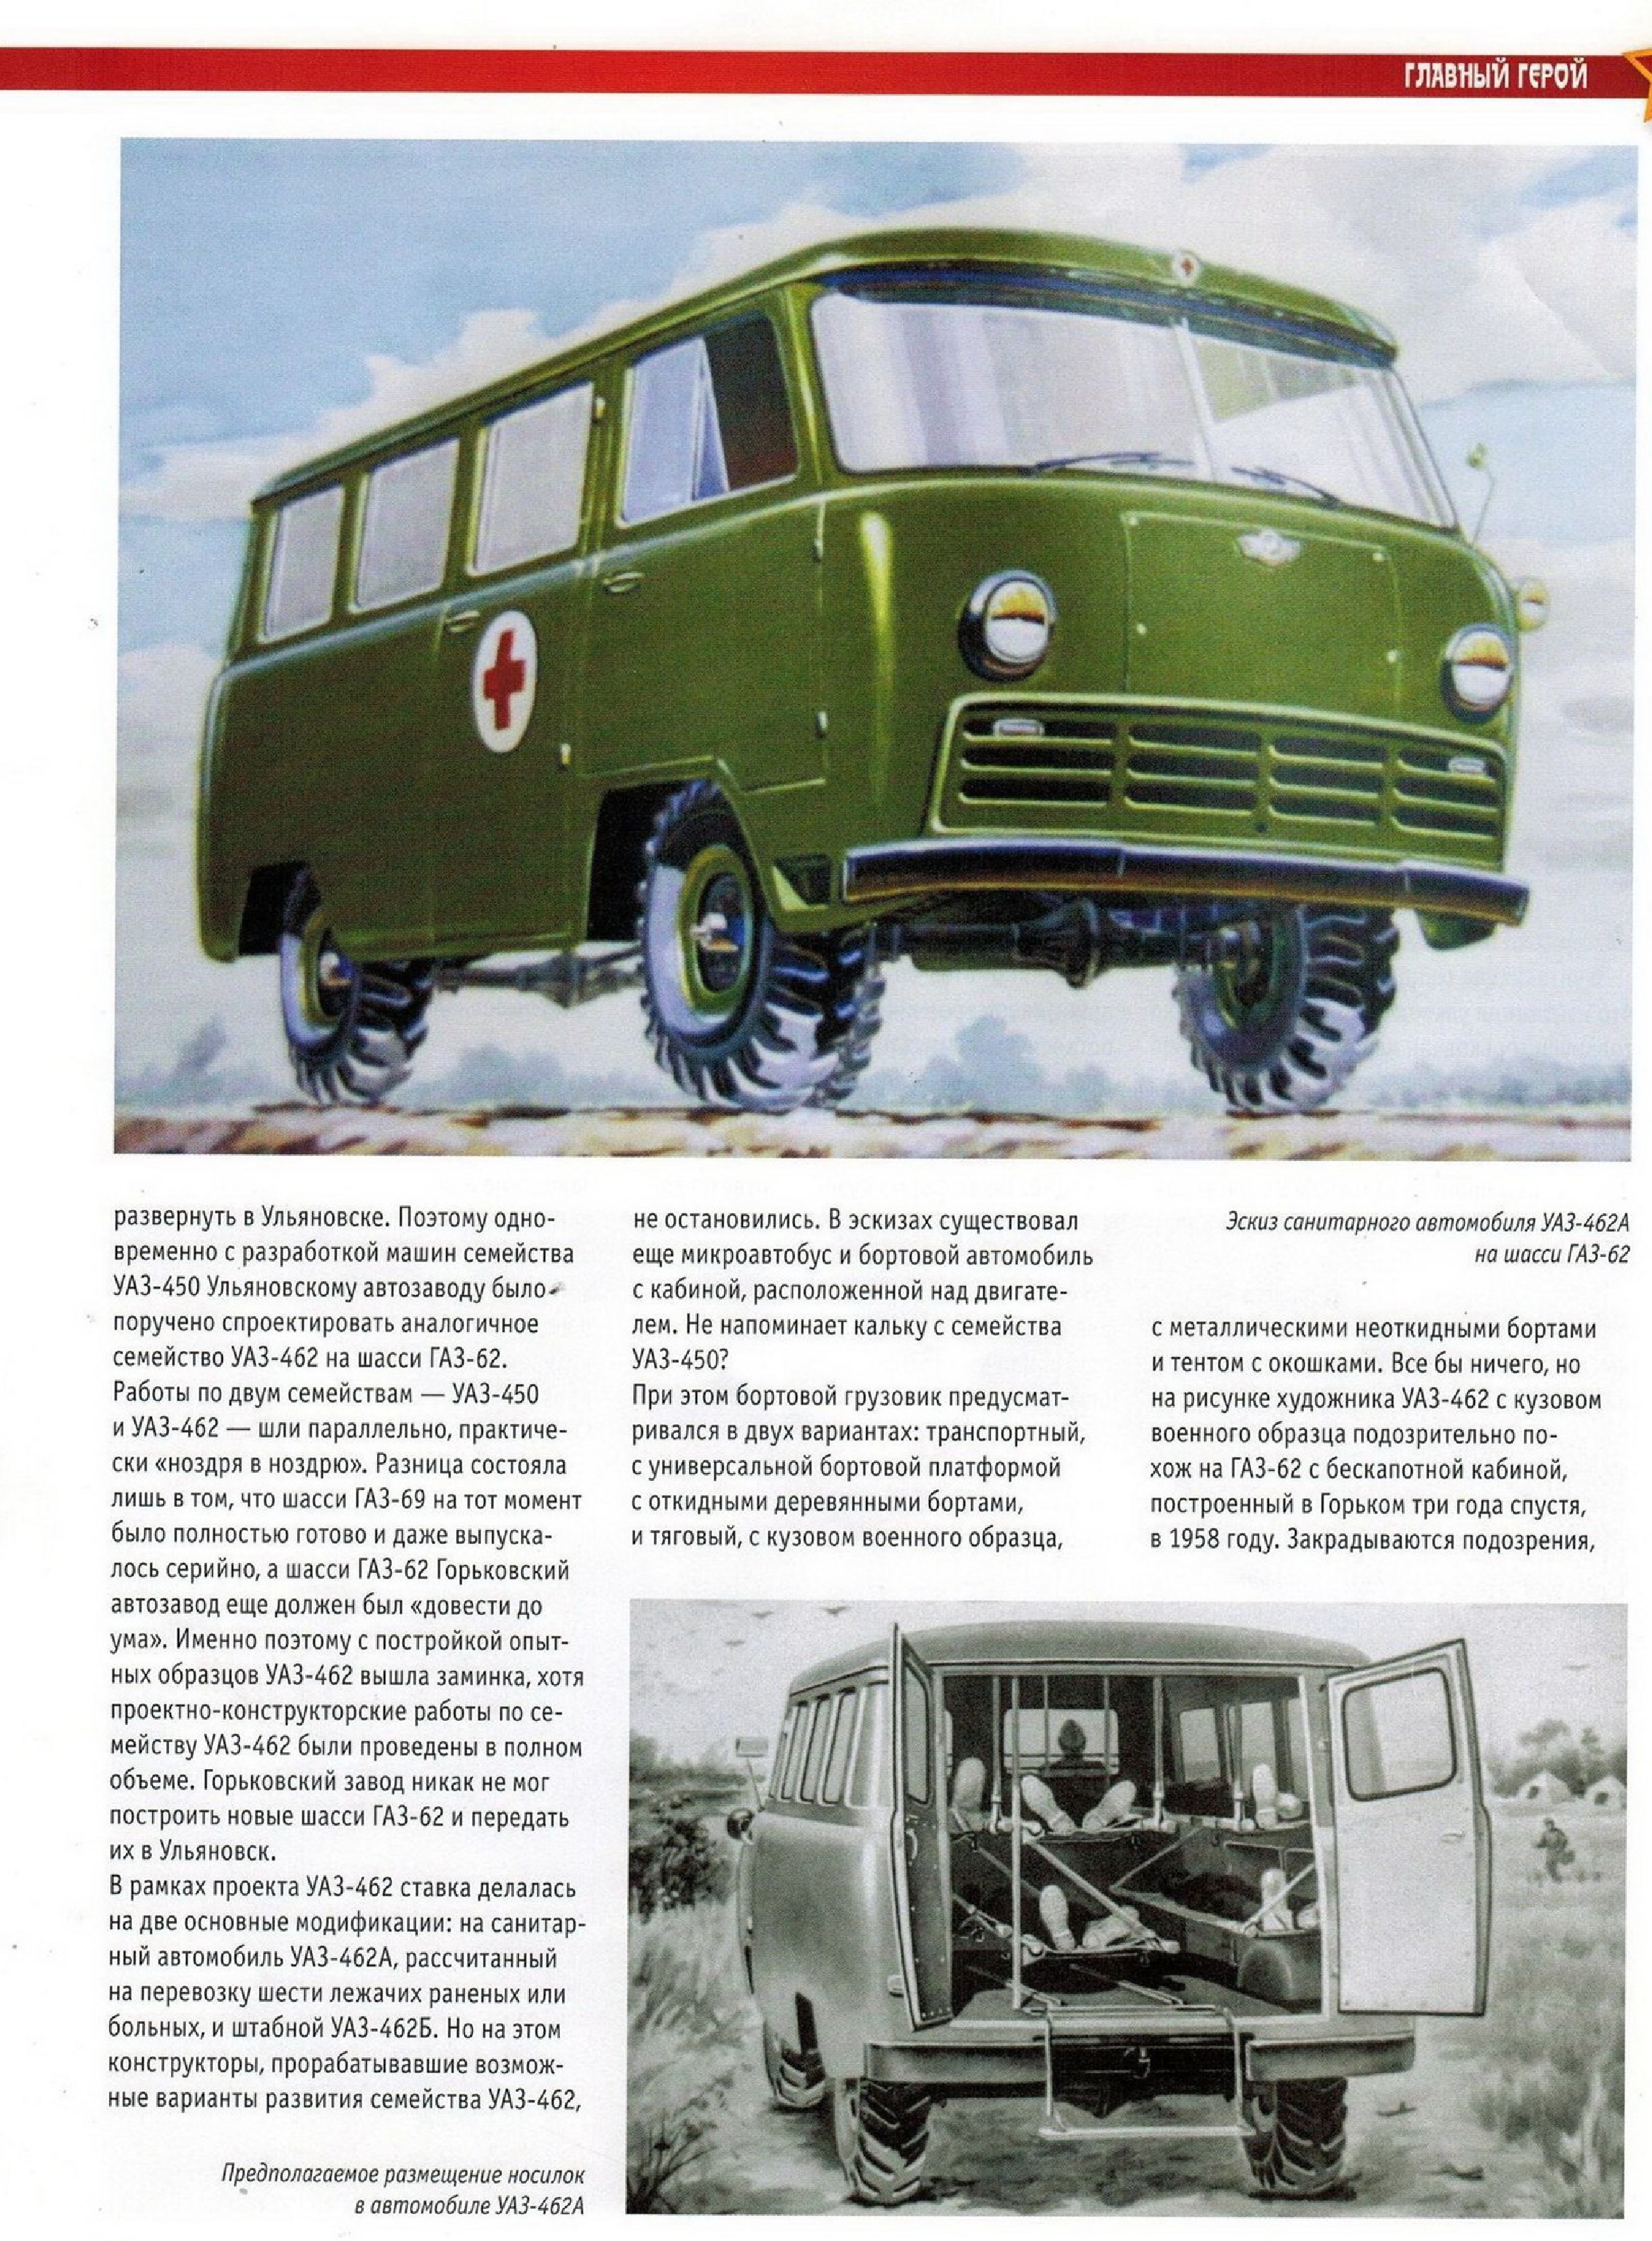 Automobile legend CCCP 191 UAZ 450.pdf